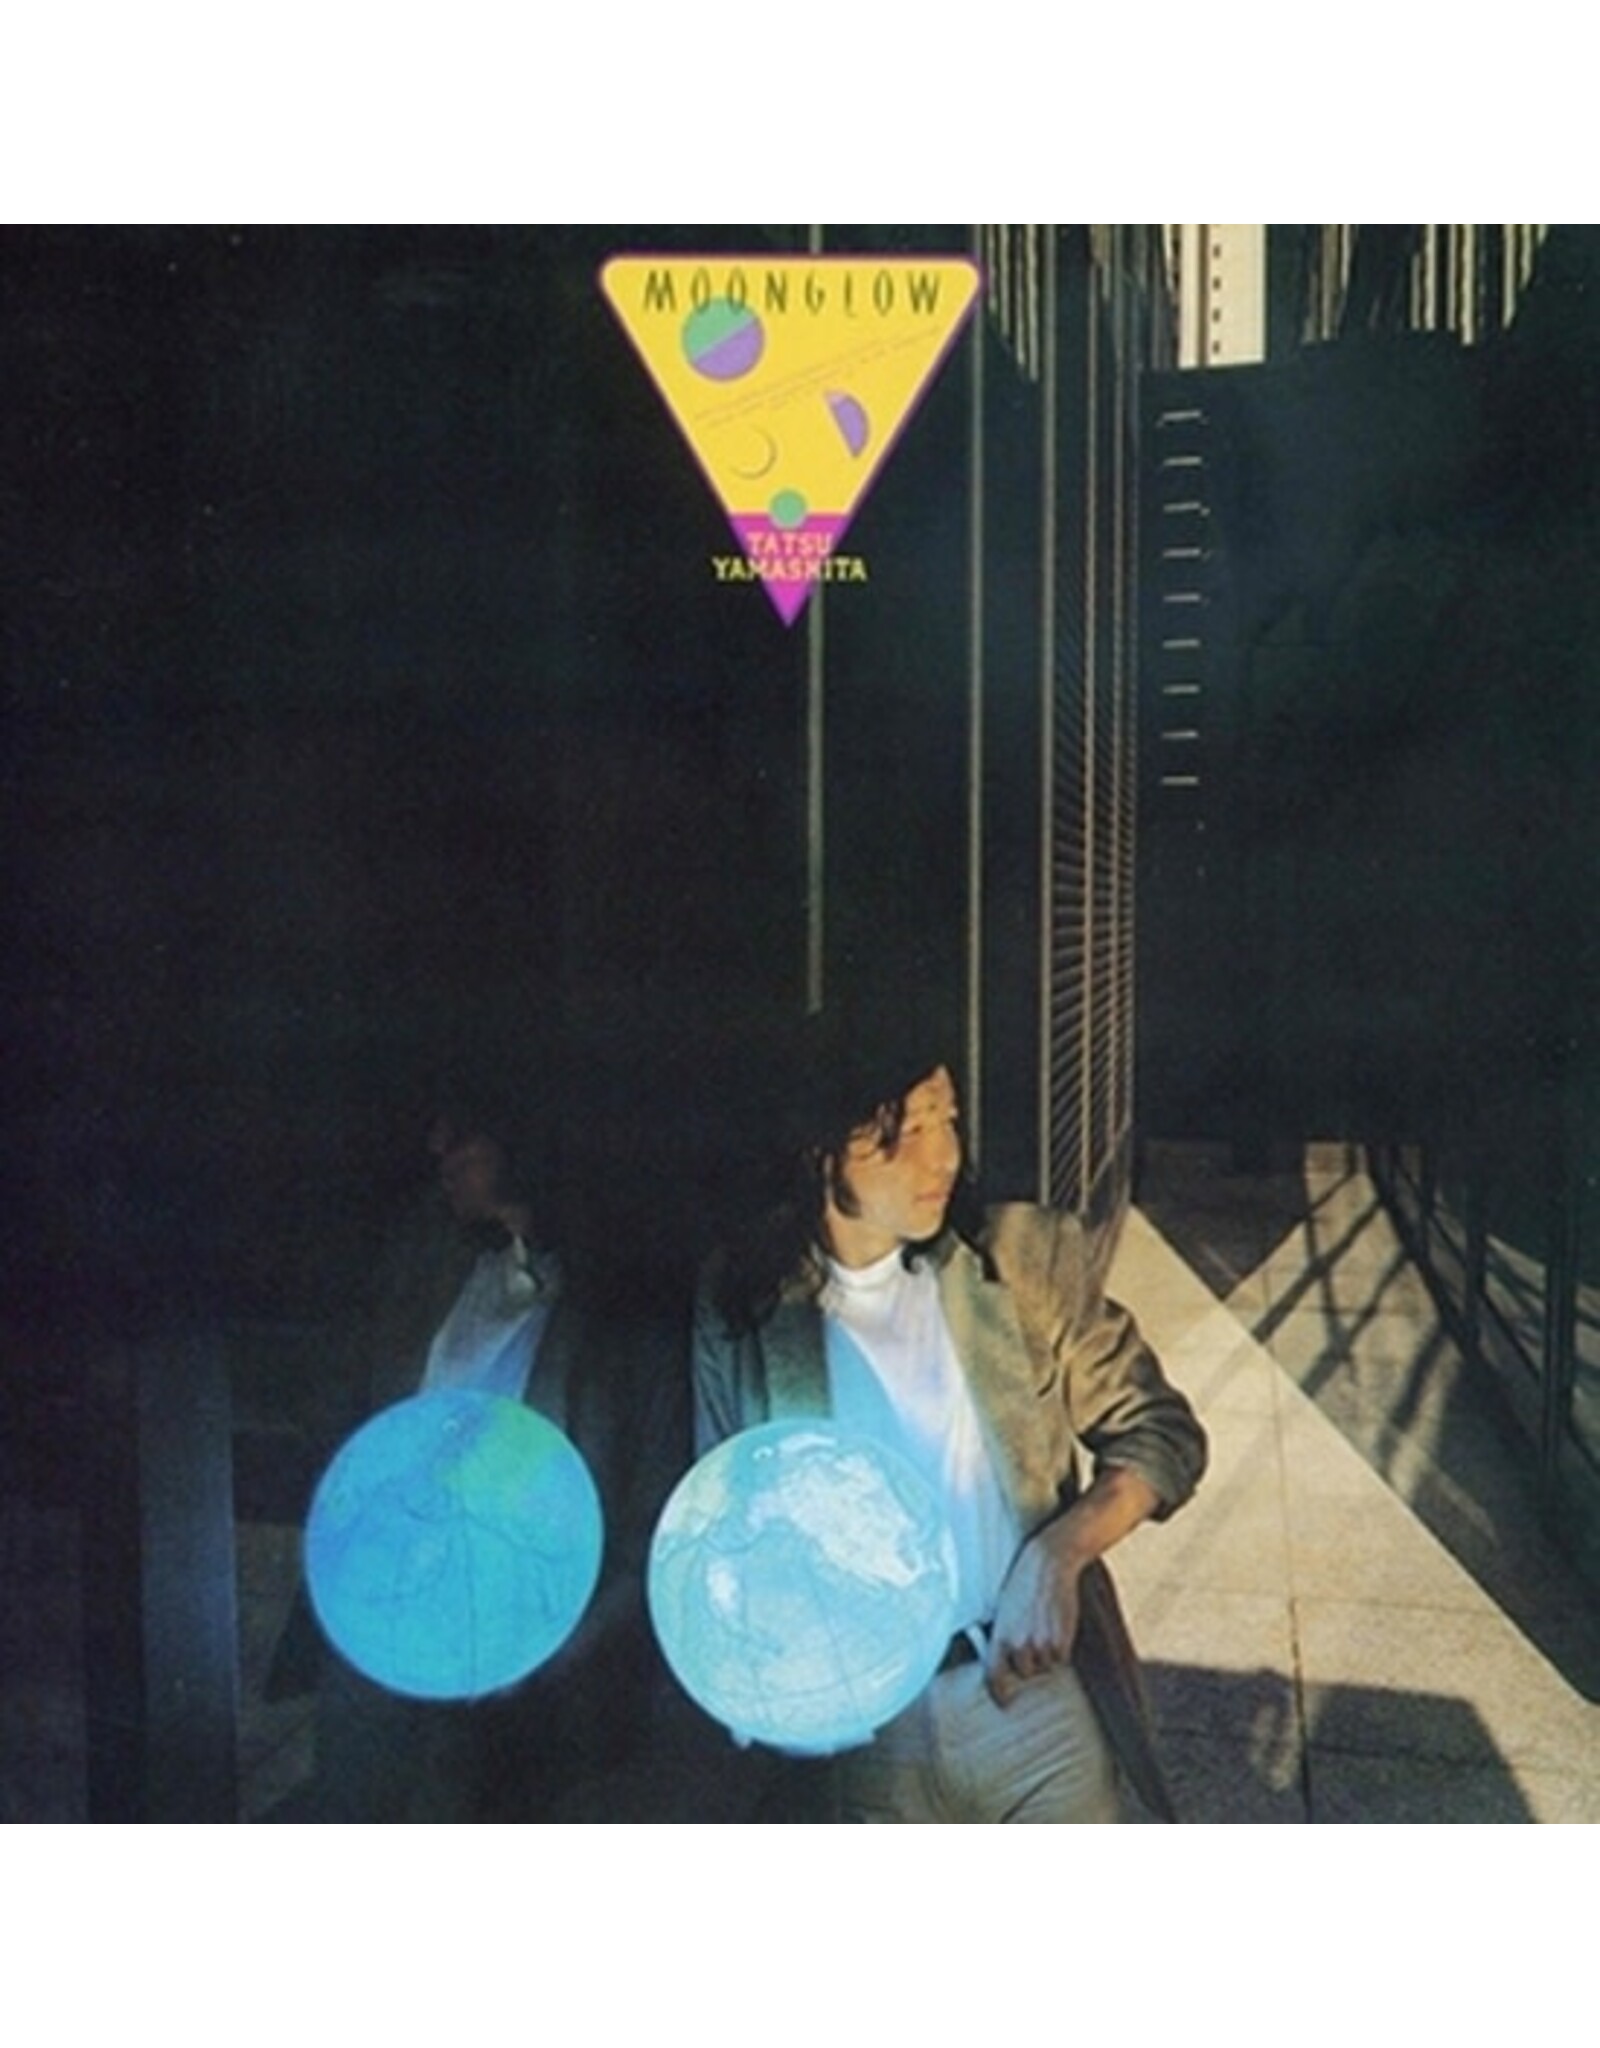 RCA Yamashita, Tatsuro: Moonglow LP